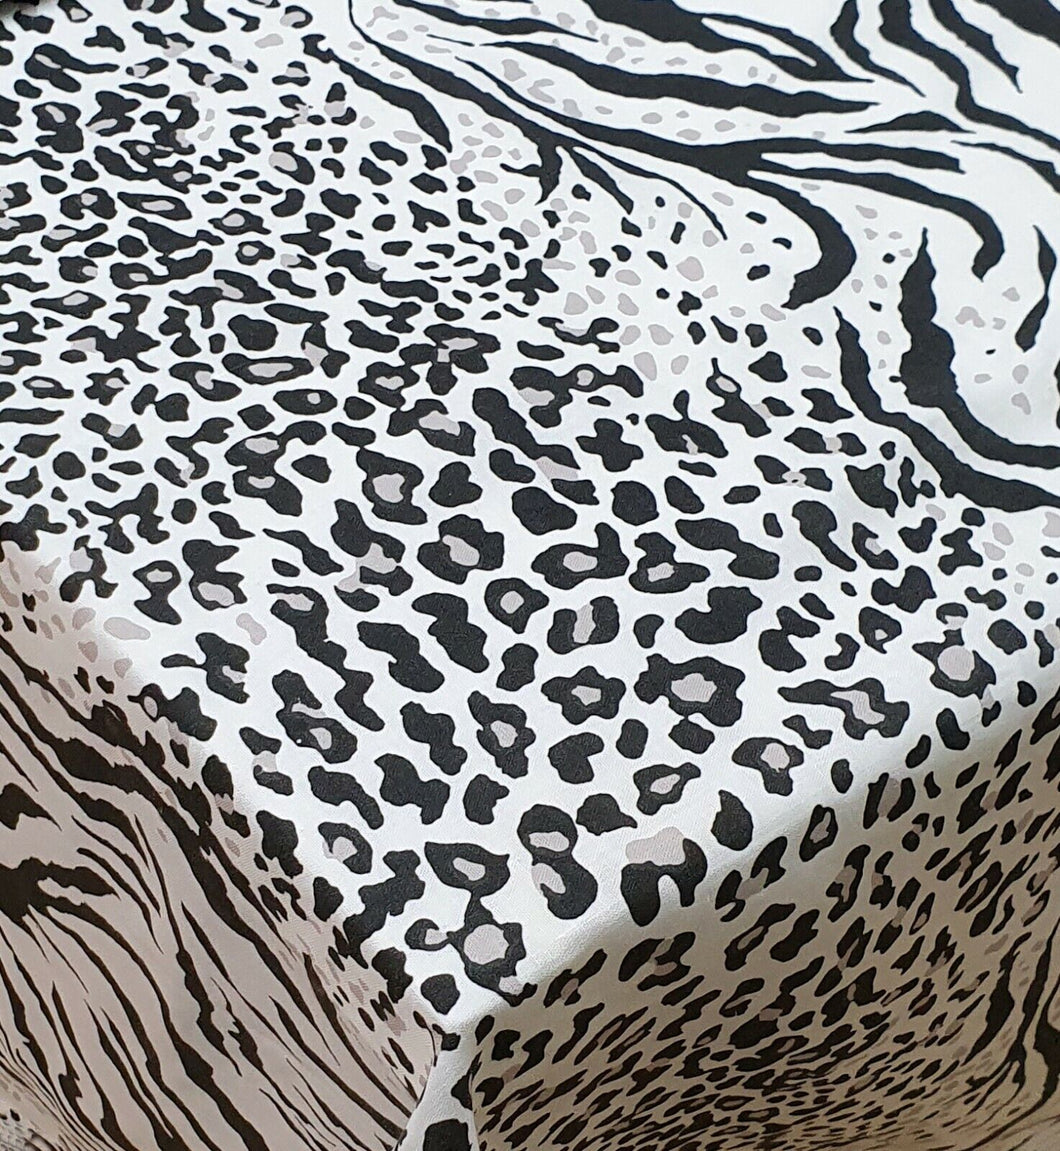 Single Bed Size Fitted Sheet Kalahari Animal Print Zebra Tiger Leopard